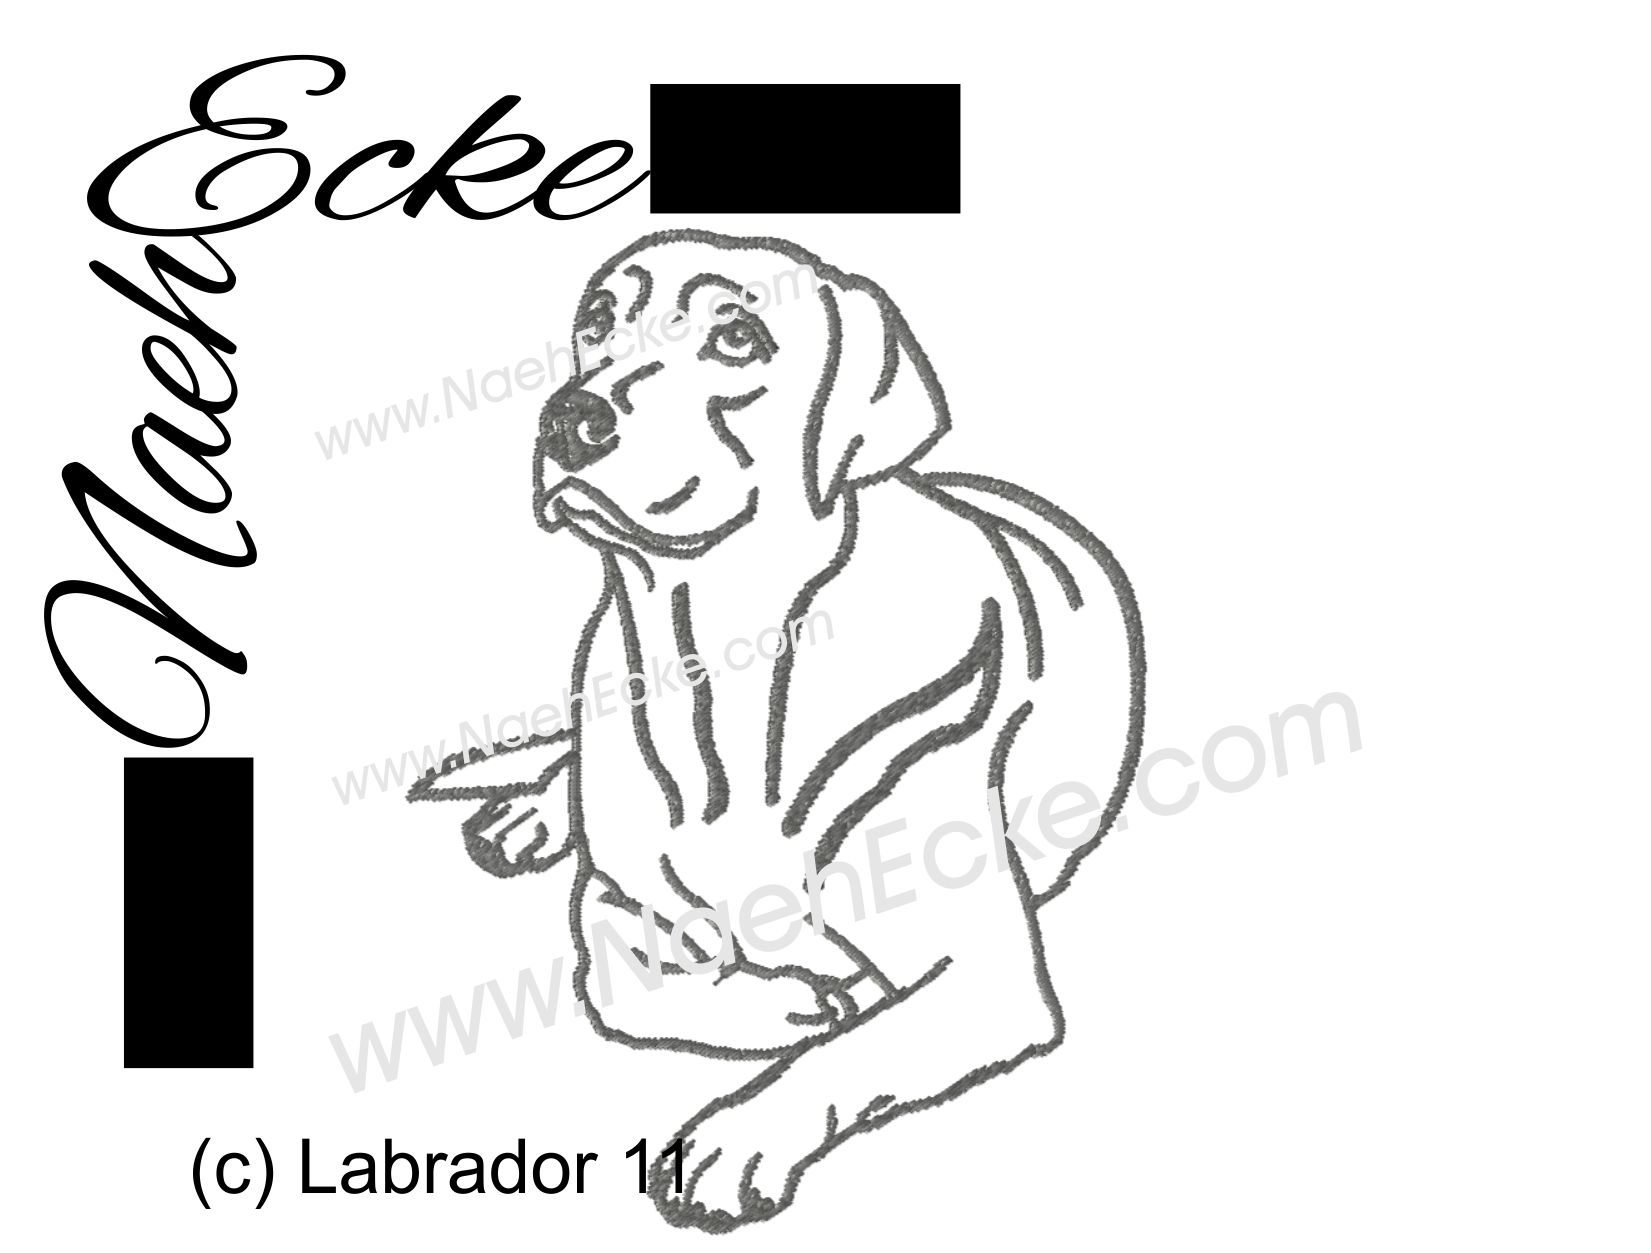 Labrador 11